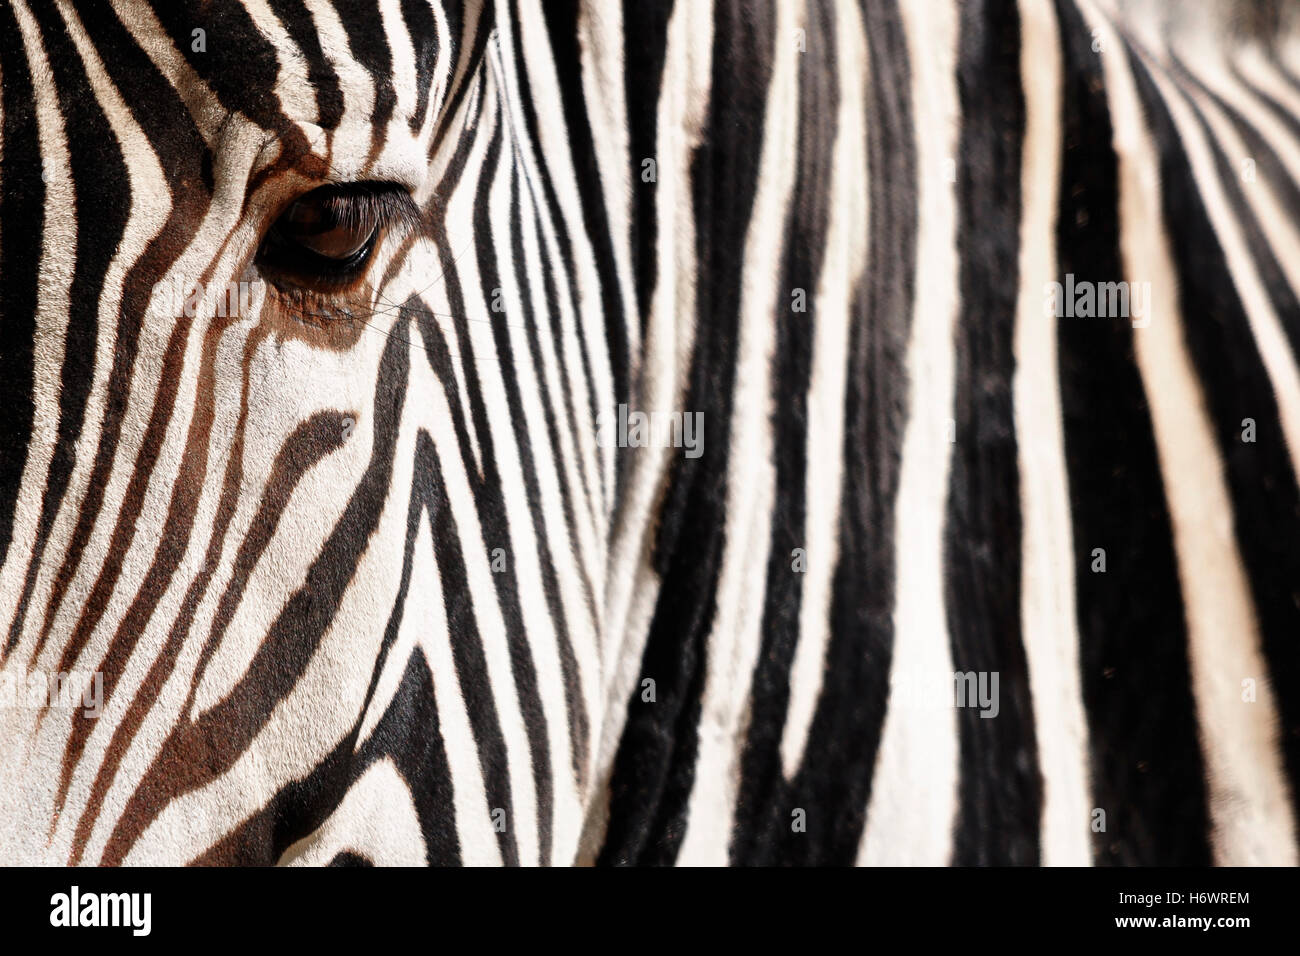 L'Afrique sauvage mammifère animal eye noir organe jetblack basané deep black zebra zoo safari de faune white stripes stripe Banque D'Images